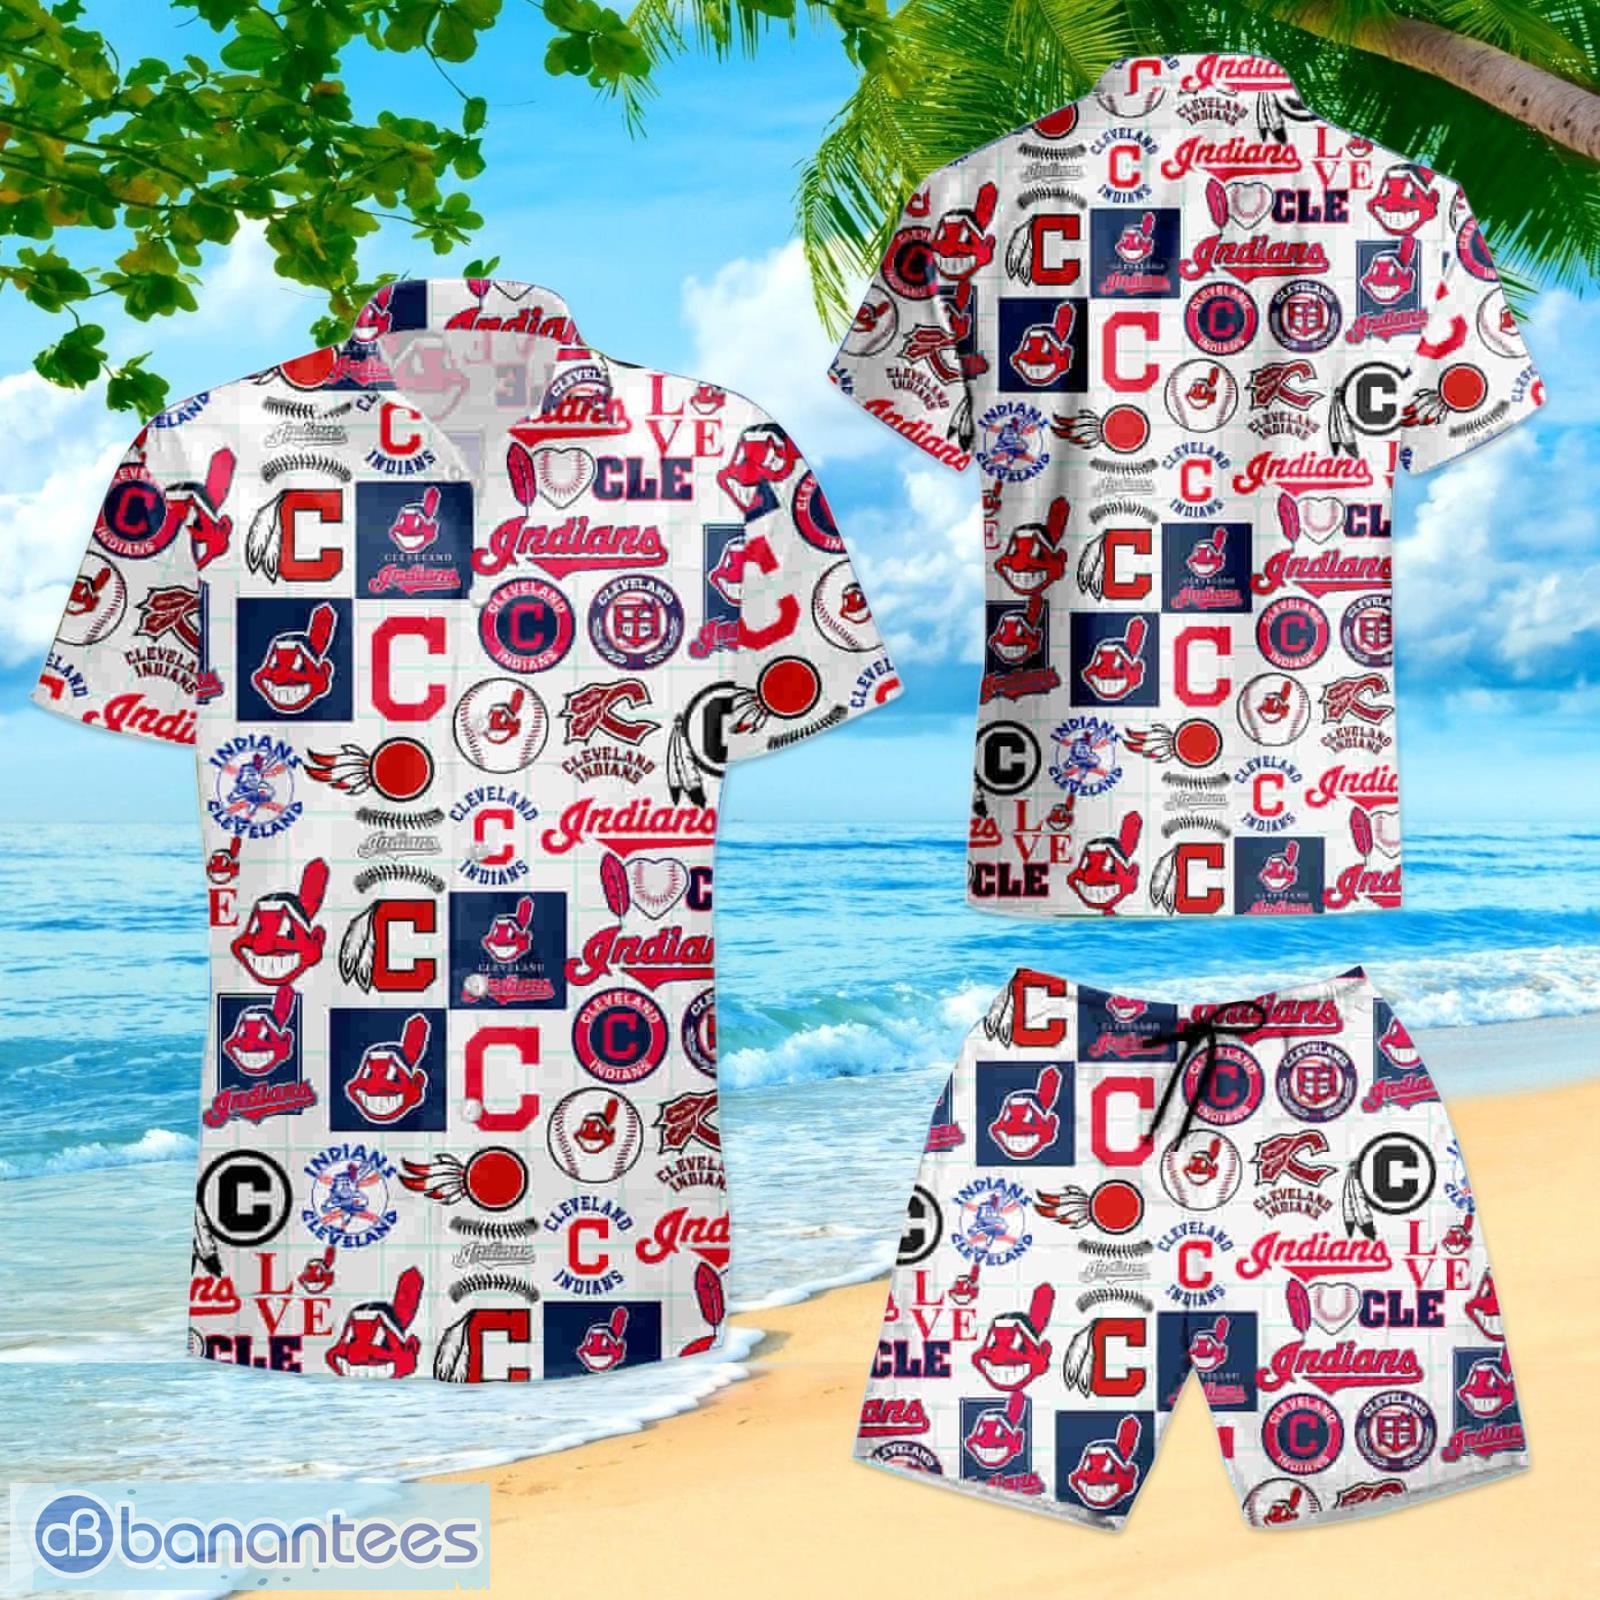 Mlb Cleveland Indians All Over Print Navy Hawaiian Shirt